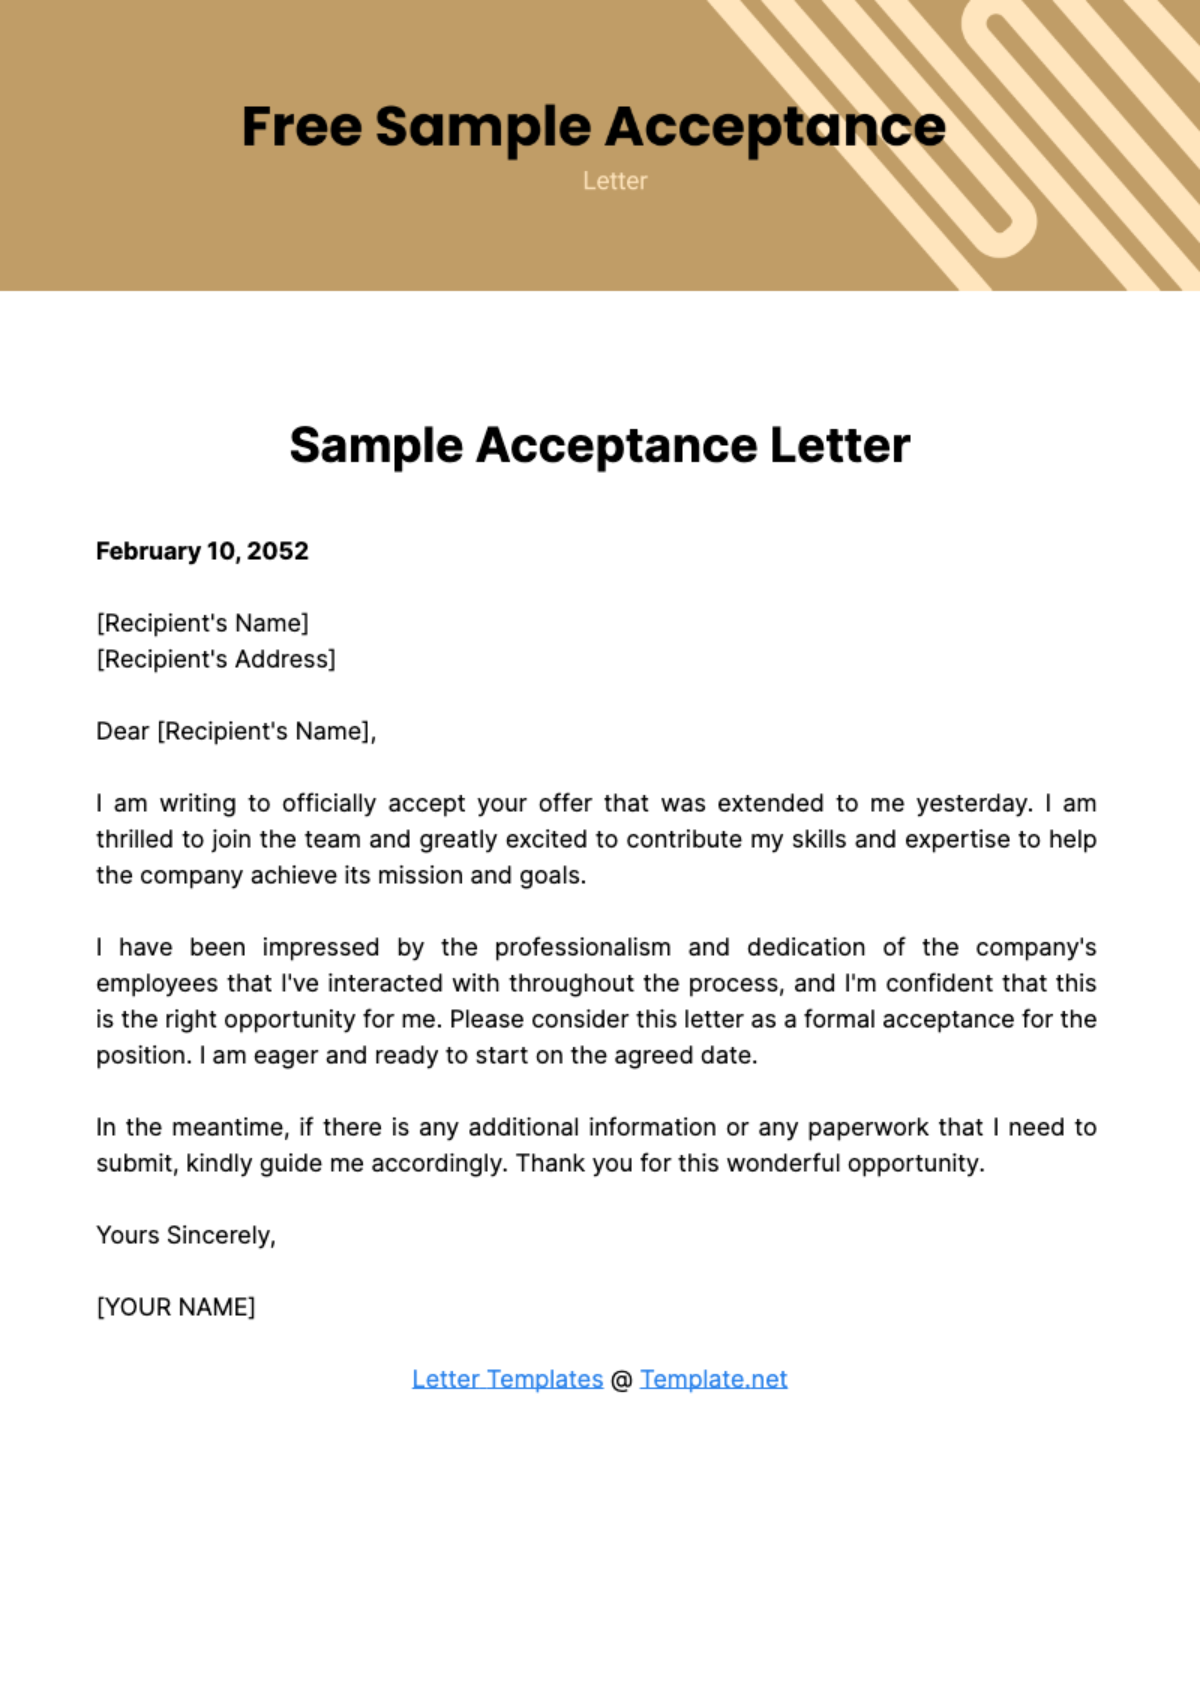 Sample Acceptance Letter Template